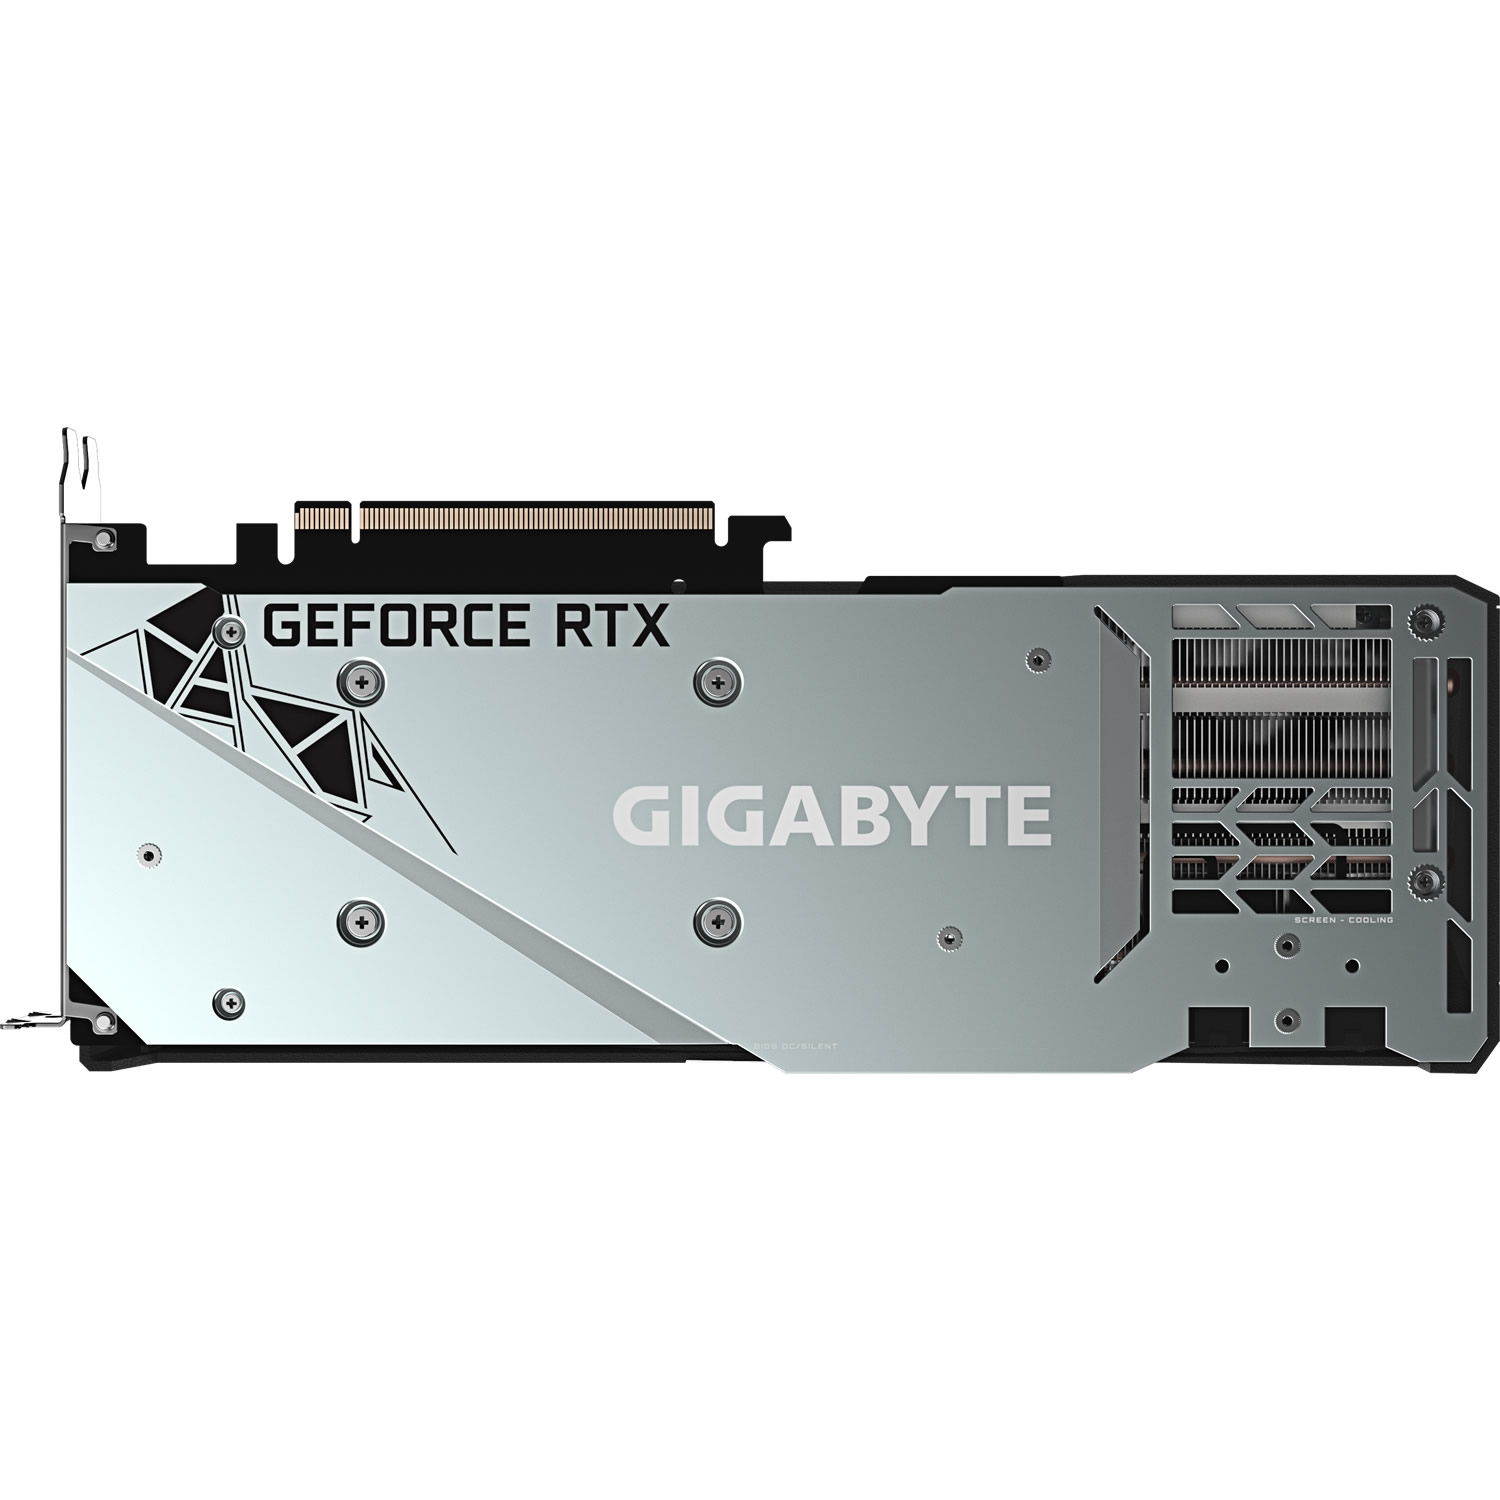 Gigabyte - Gigabyte GeForce RTX 3070 Gaming OC LHR 8GB GDDR6 PCI-Express Graphics Card